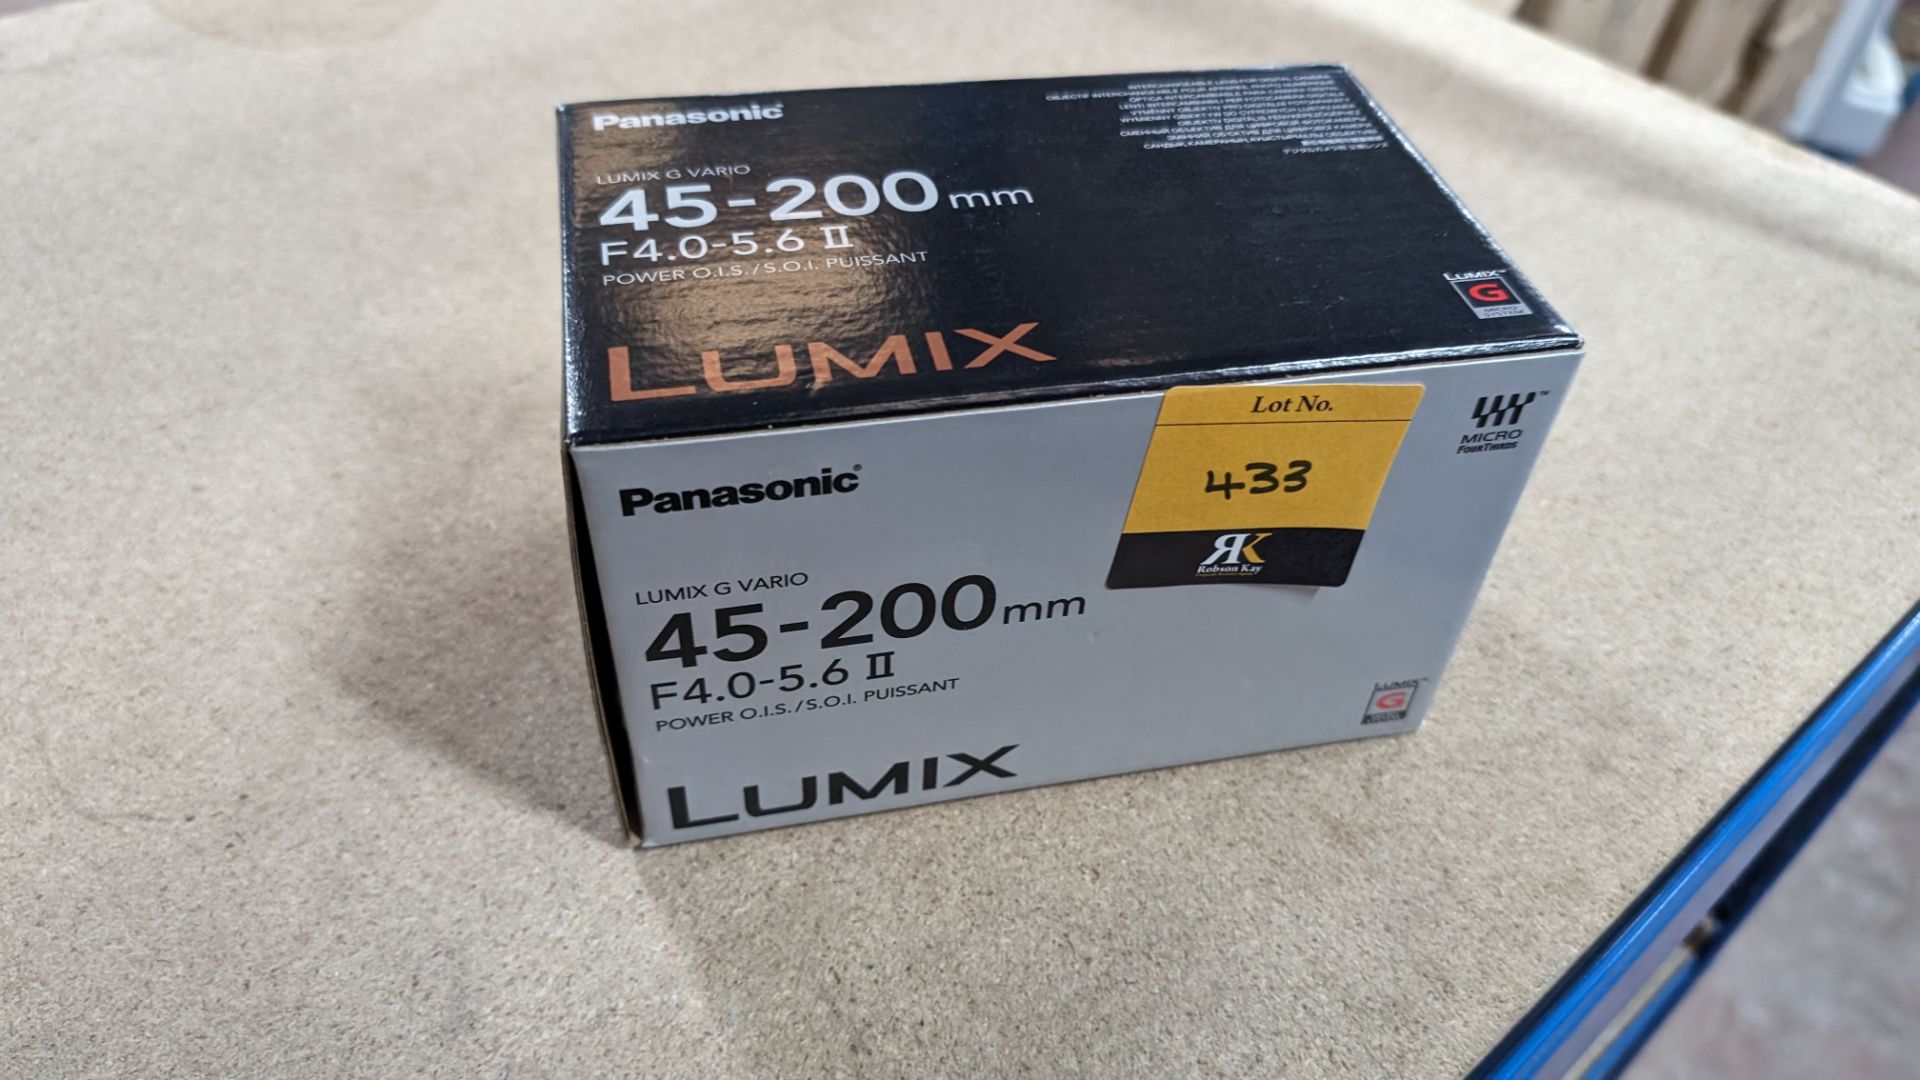 Panasonic Lumix G Vario 45-200mm lens, model H-FSA45200, f4.0-5.6 II - Image 3 of 6